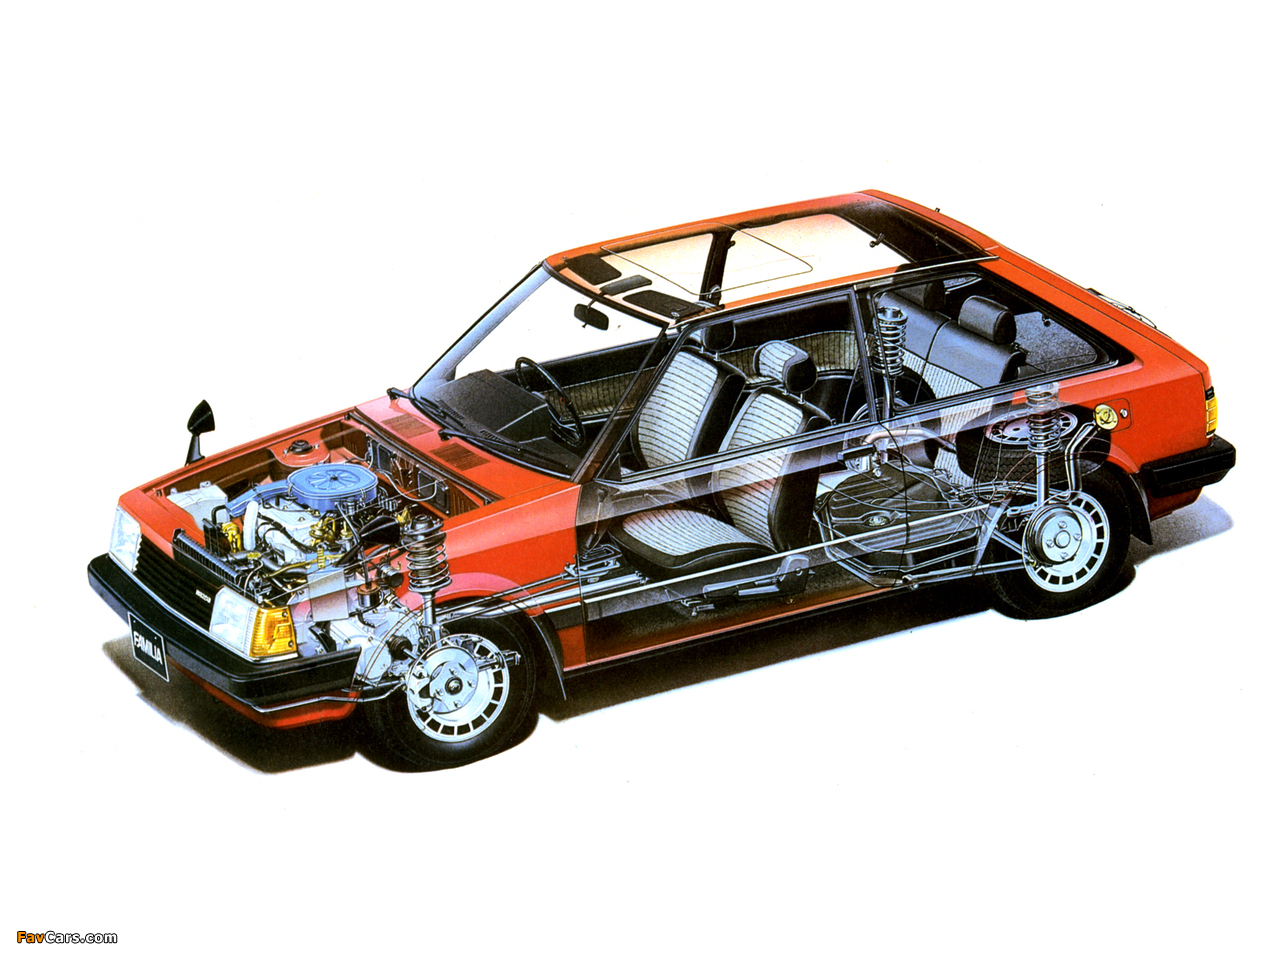 Mazda Familia Hatchback 1980–85 pictures (1280 x 960)